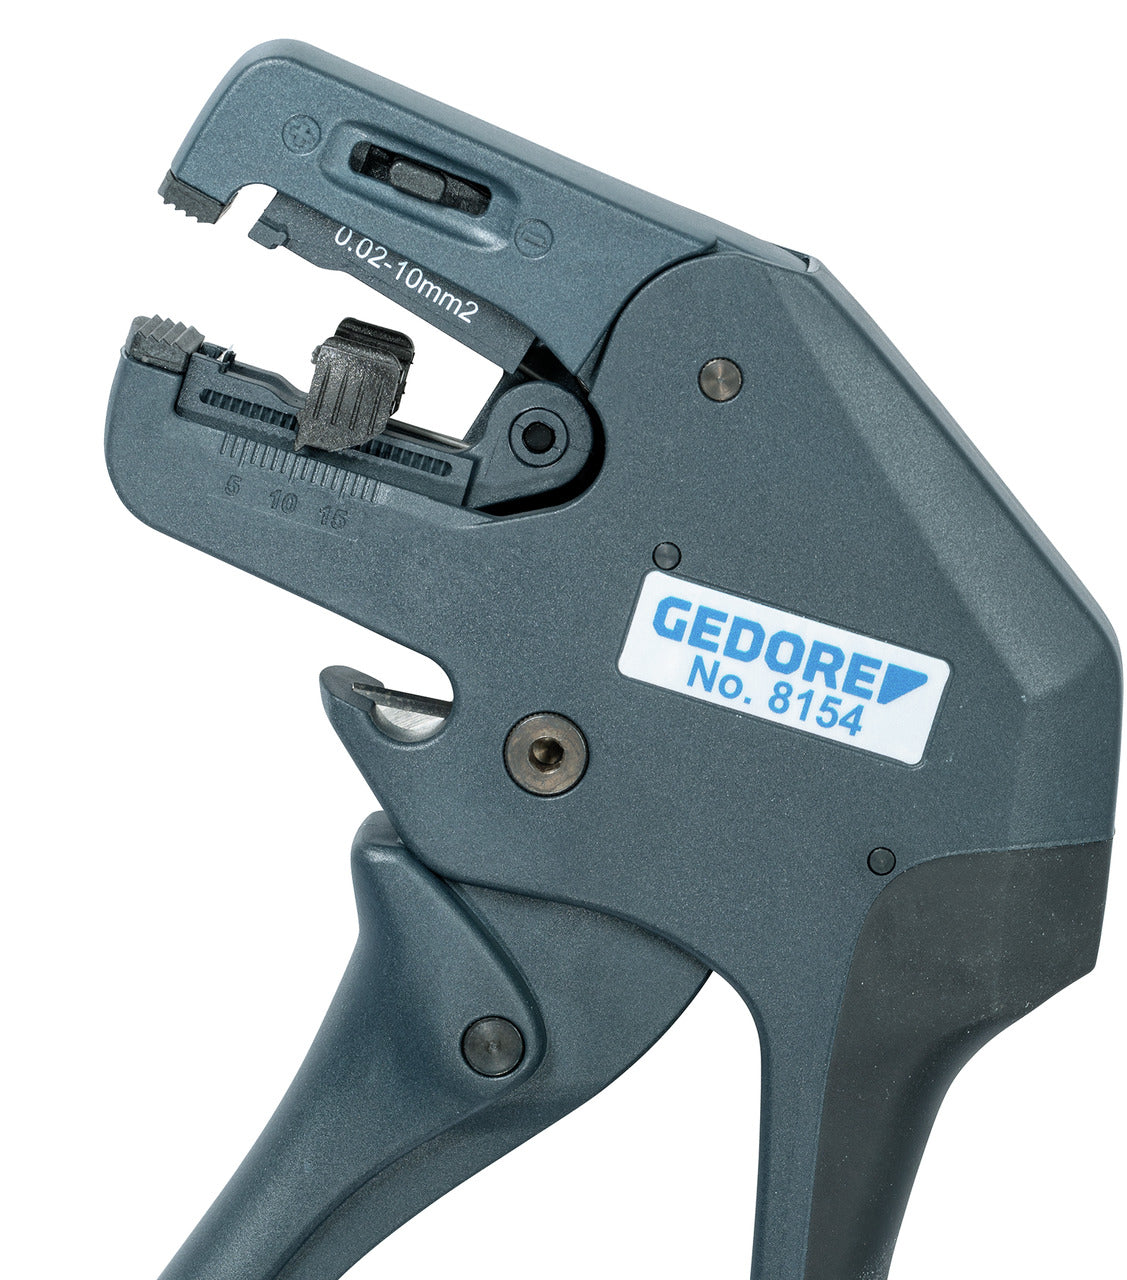 GEDORE 8154 - Alicates de pelar StrippMax-Pistol Professional (3416453)